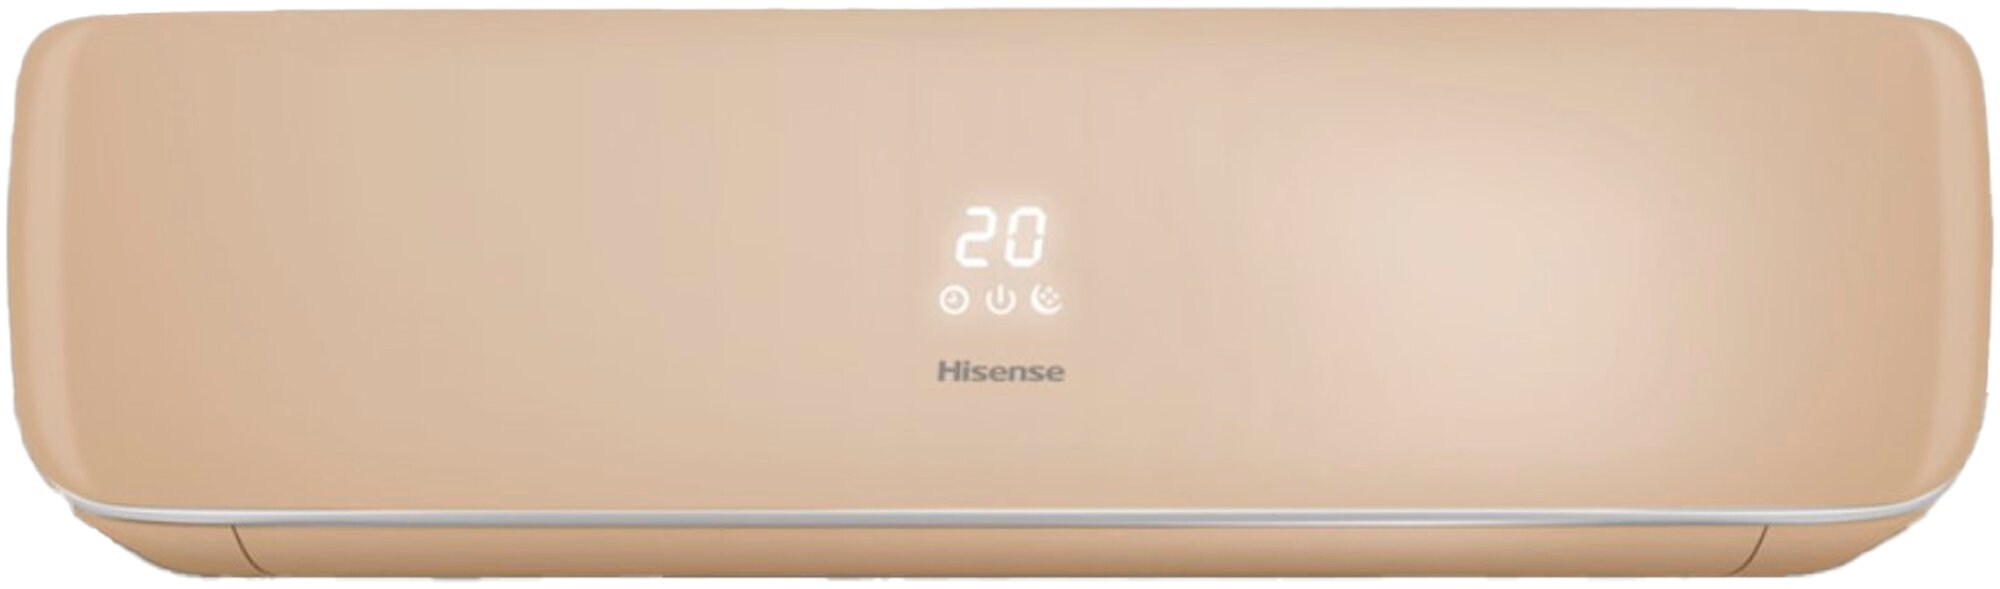 Сплит-система Hisense Hisense Premium Champagne Super DC Inverter AS-13UW4SVETG157(С)